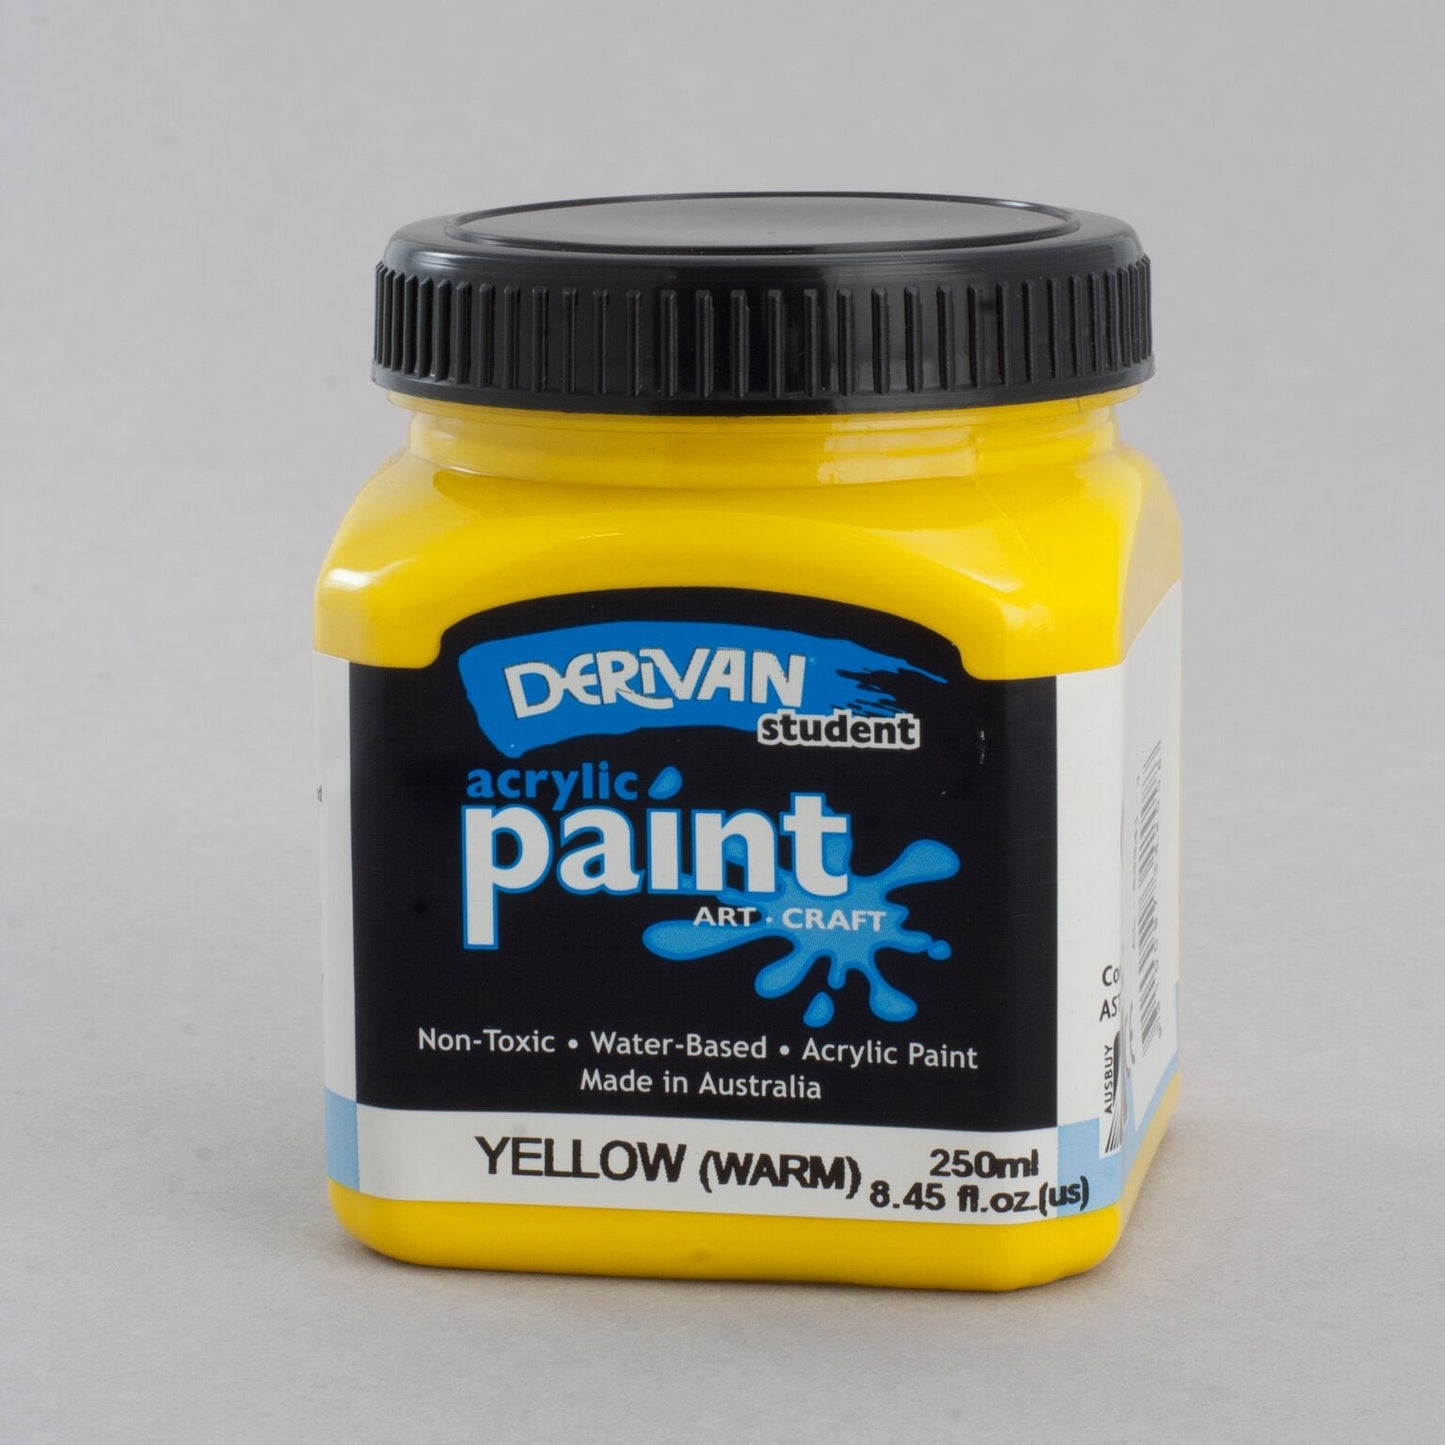 Derivan Students 250ml Yellow (Warm) - theartshop.com.au